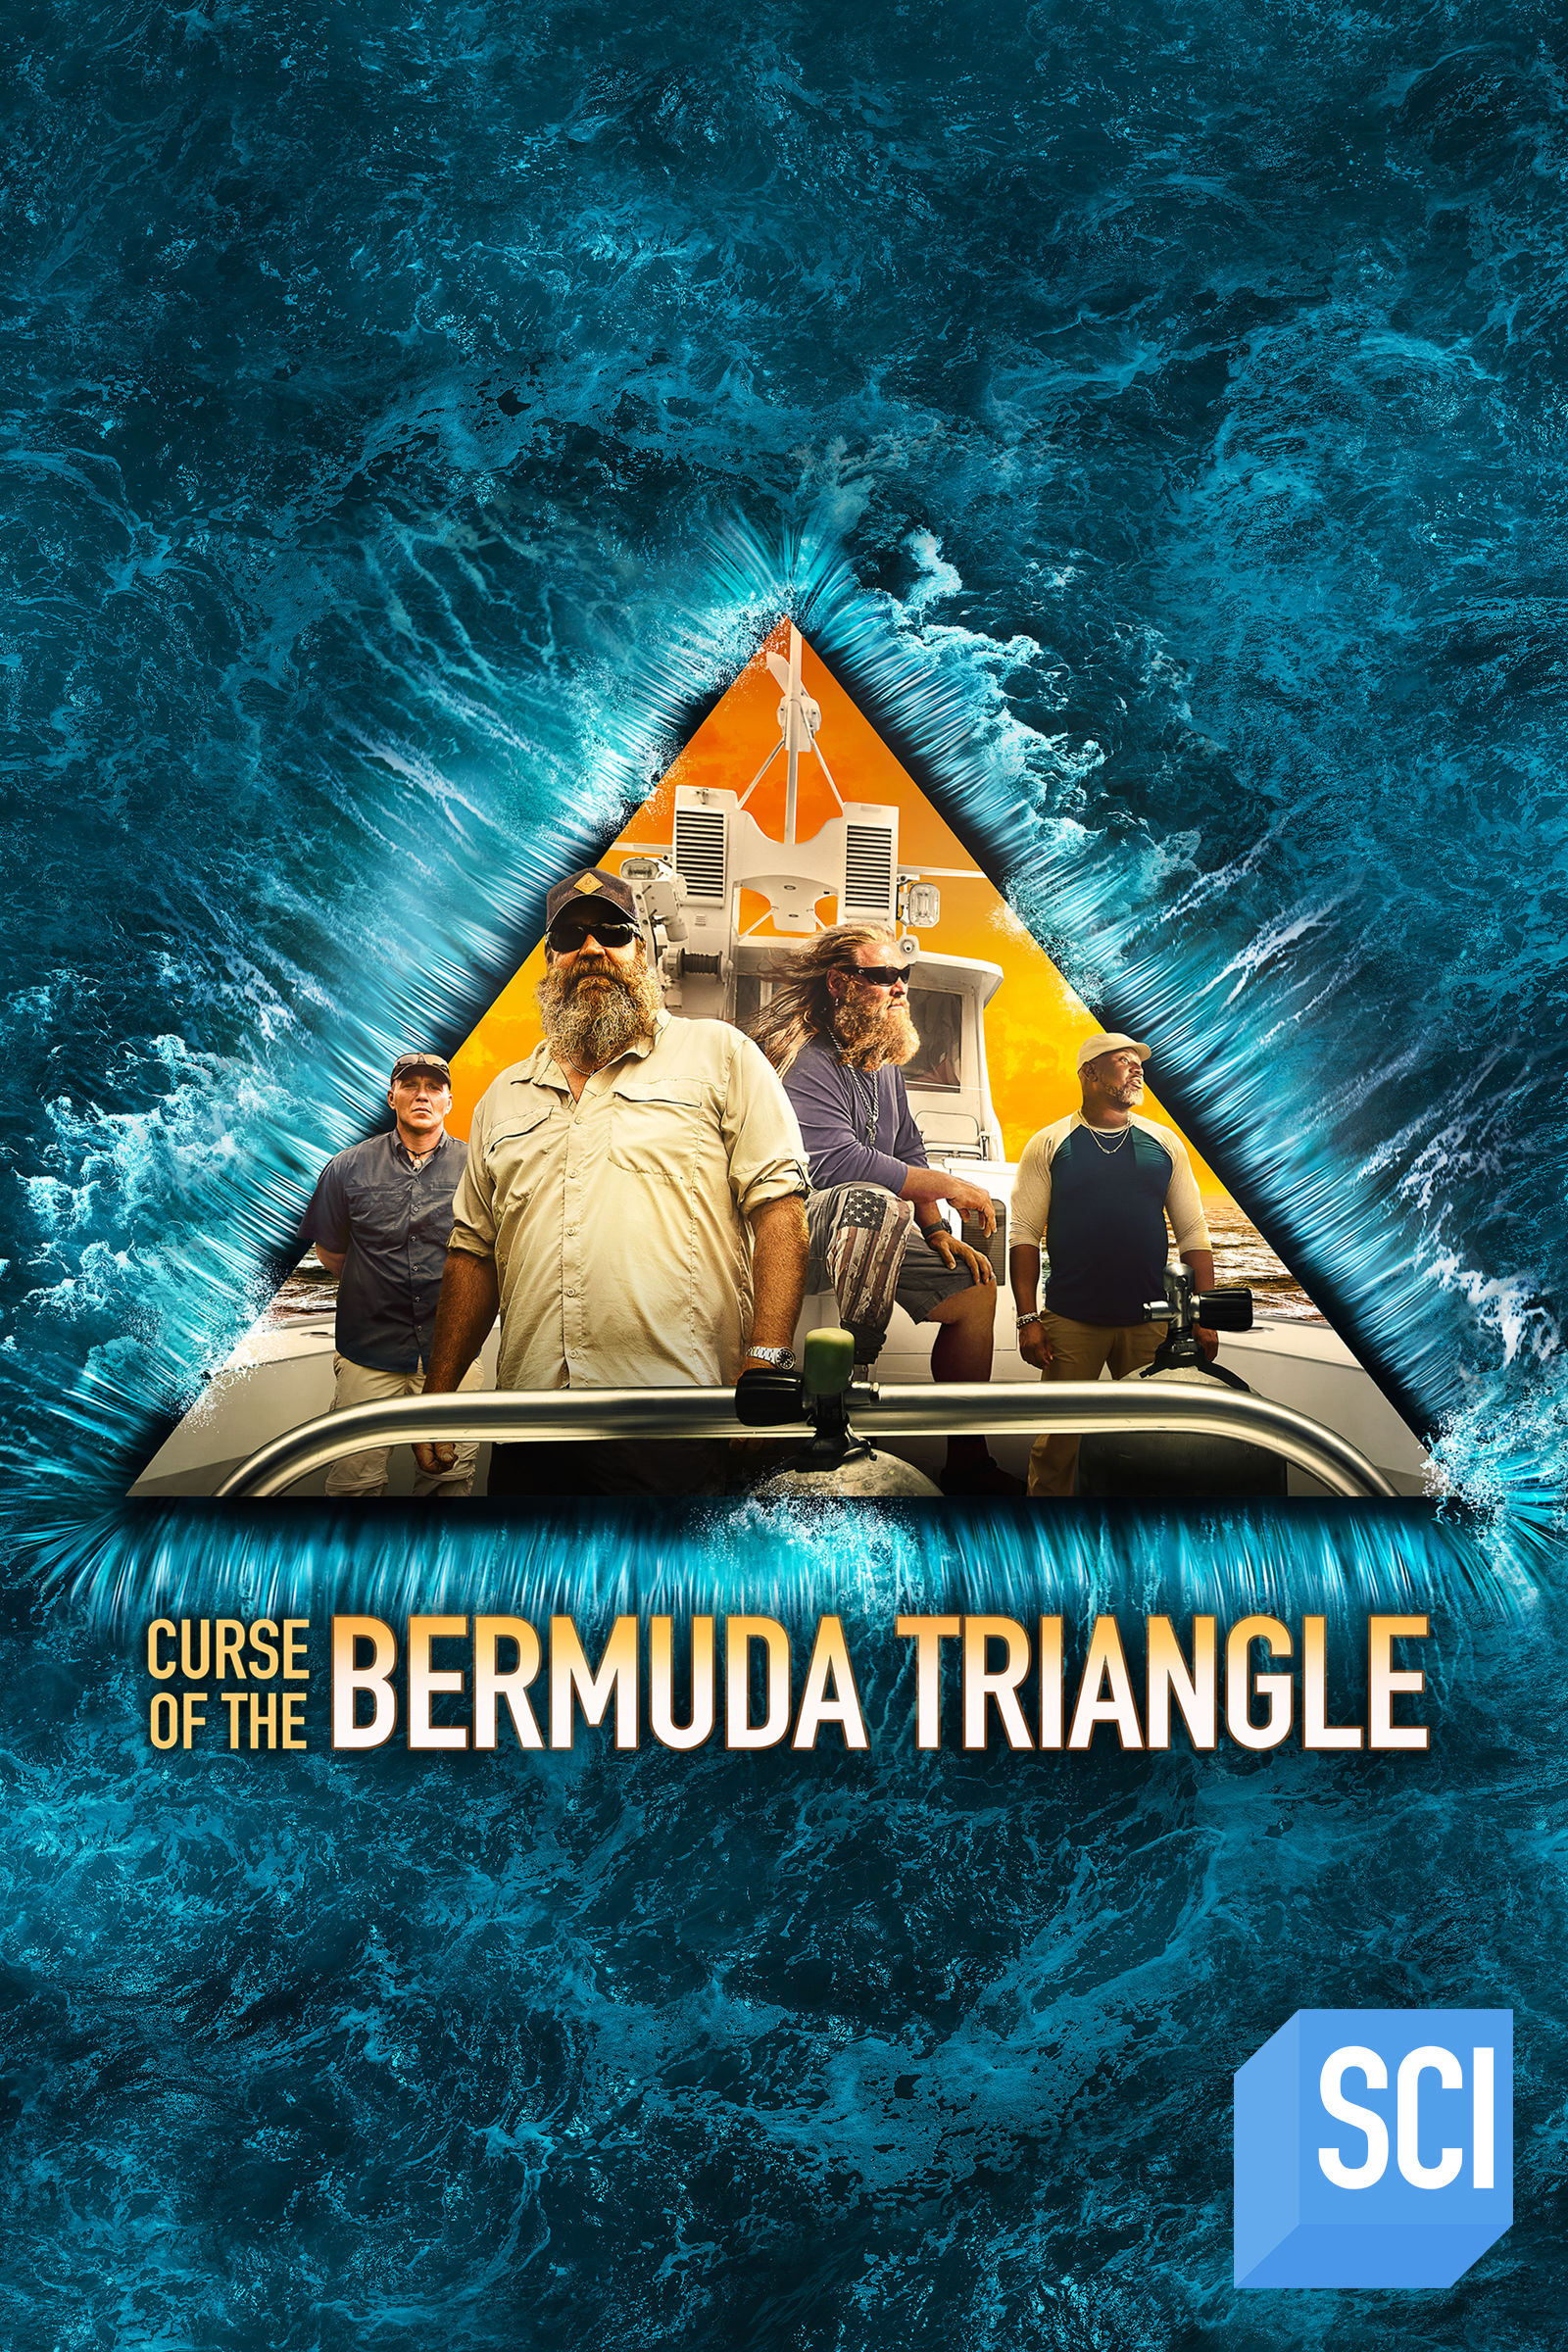 Curse of the Bermuda Triangle ne zaman